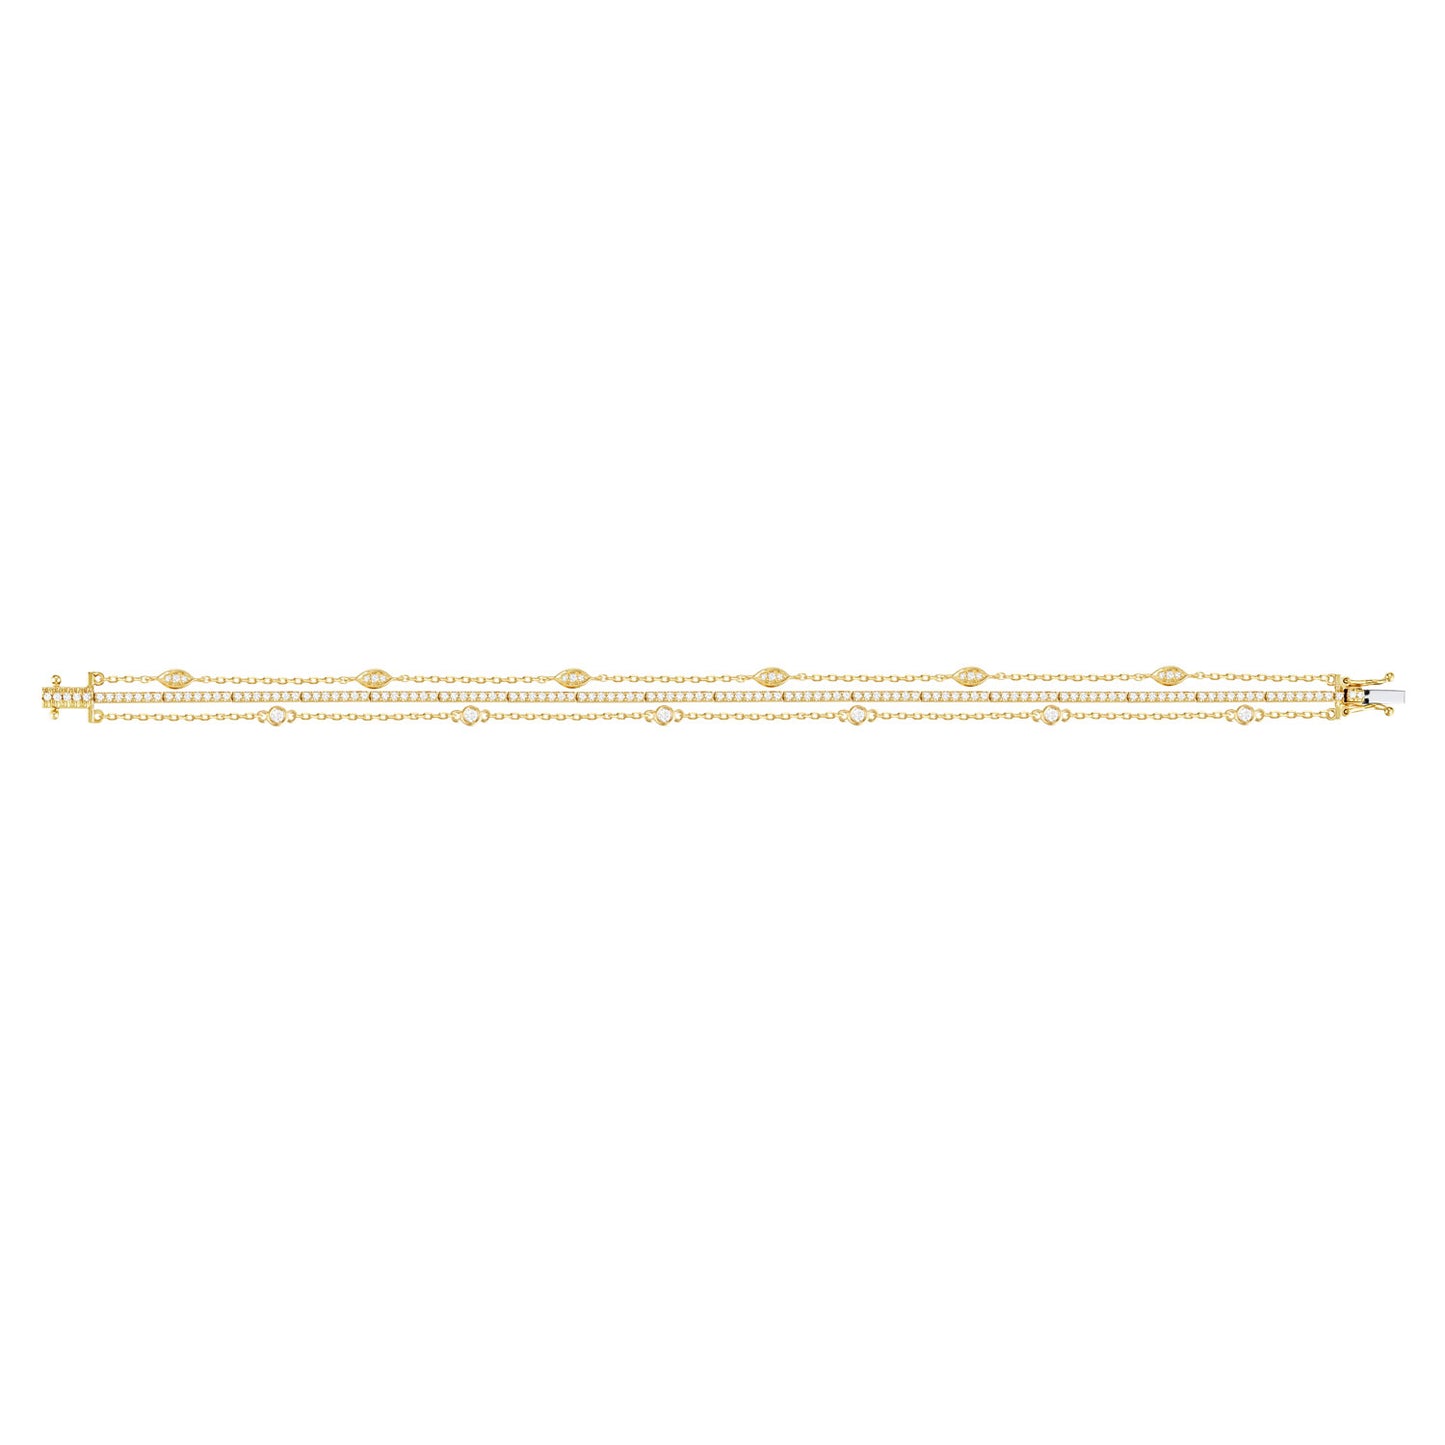 Luvente 14 Karat Yellow Gold Diamond Line Bracelet with Marquise Diamond Dangle Stations